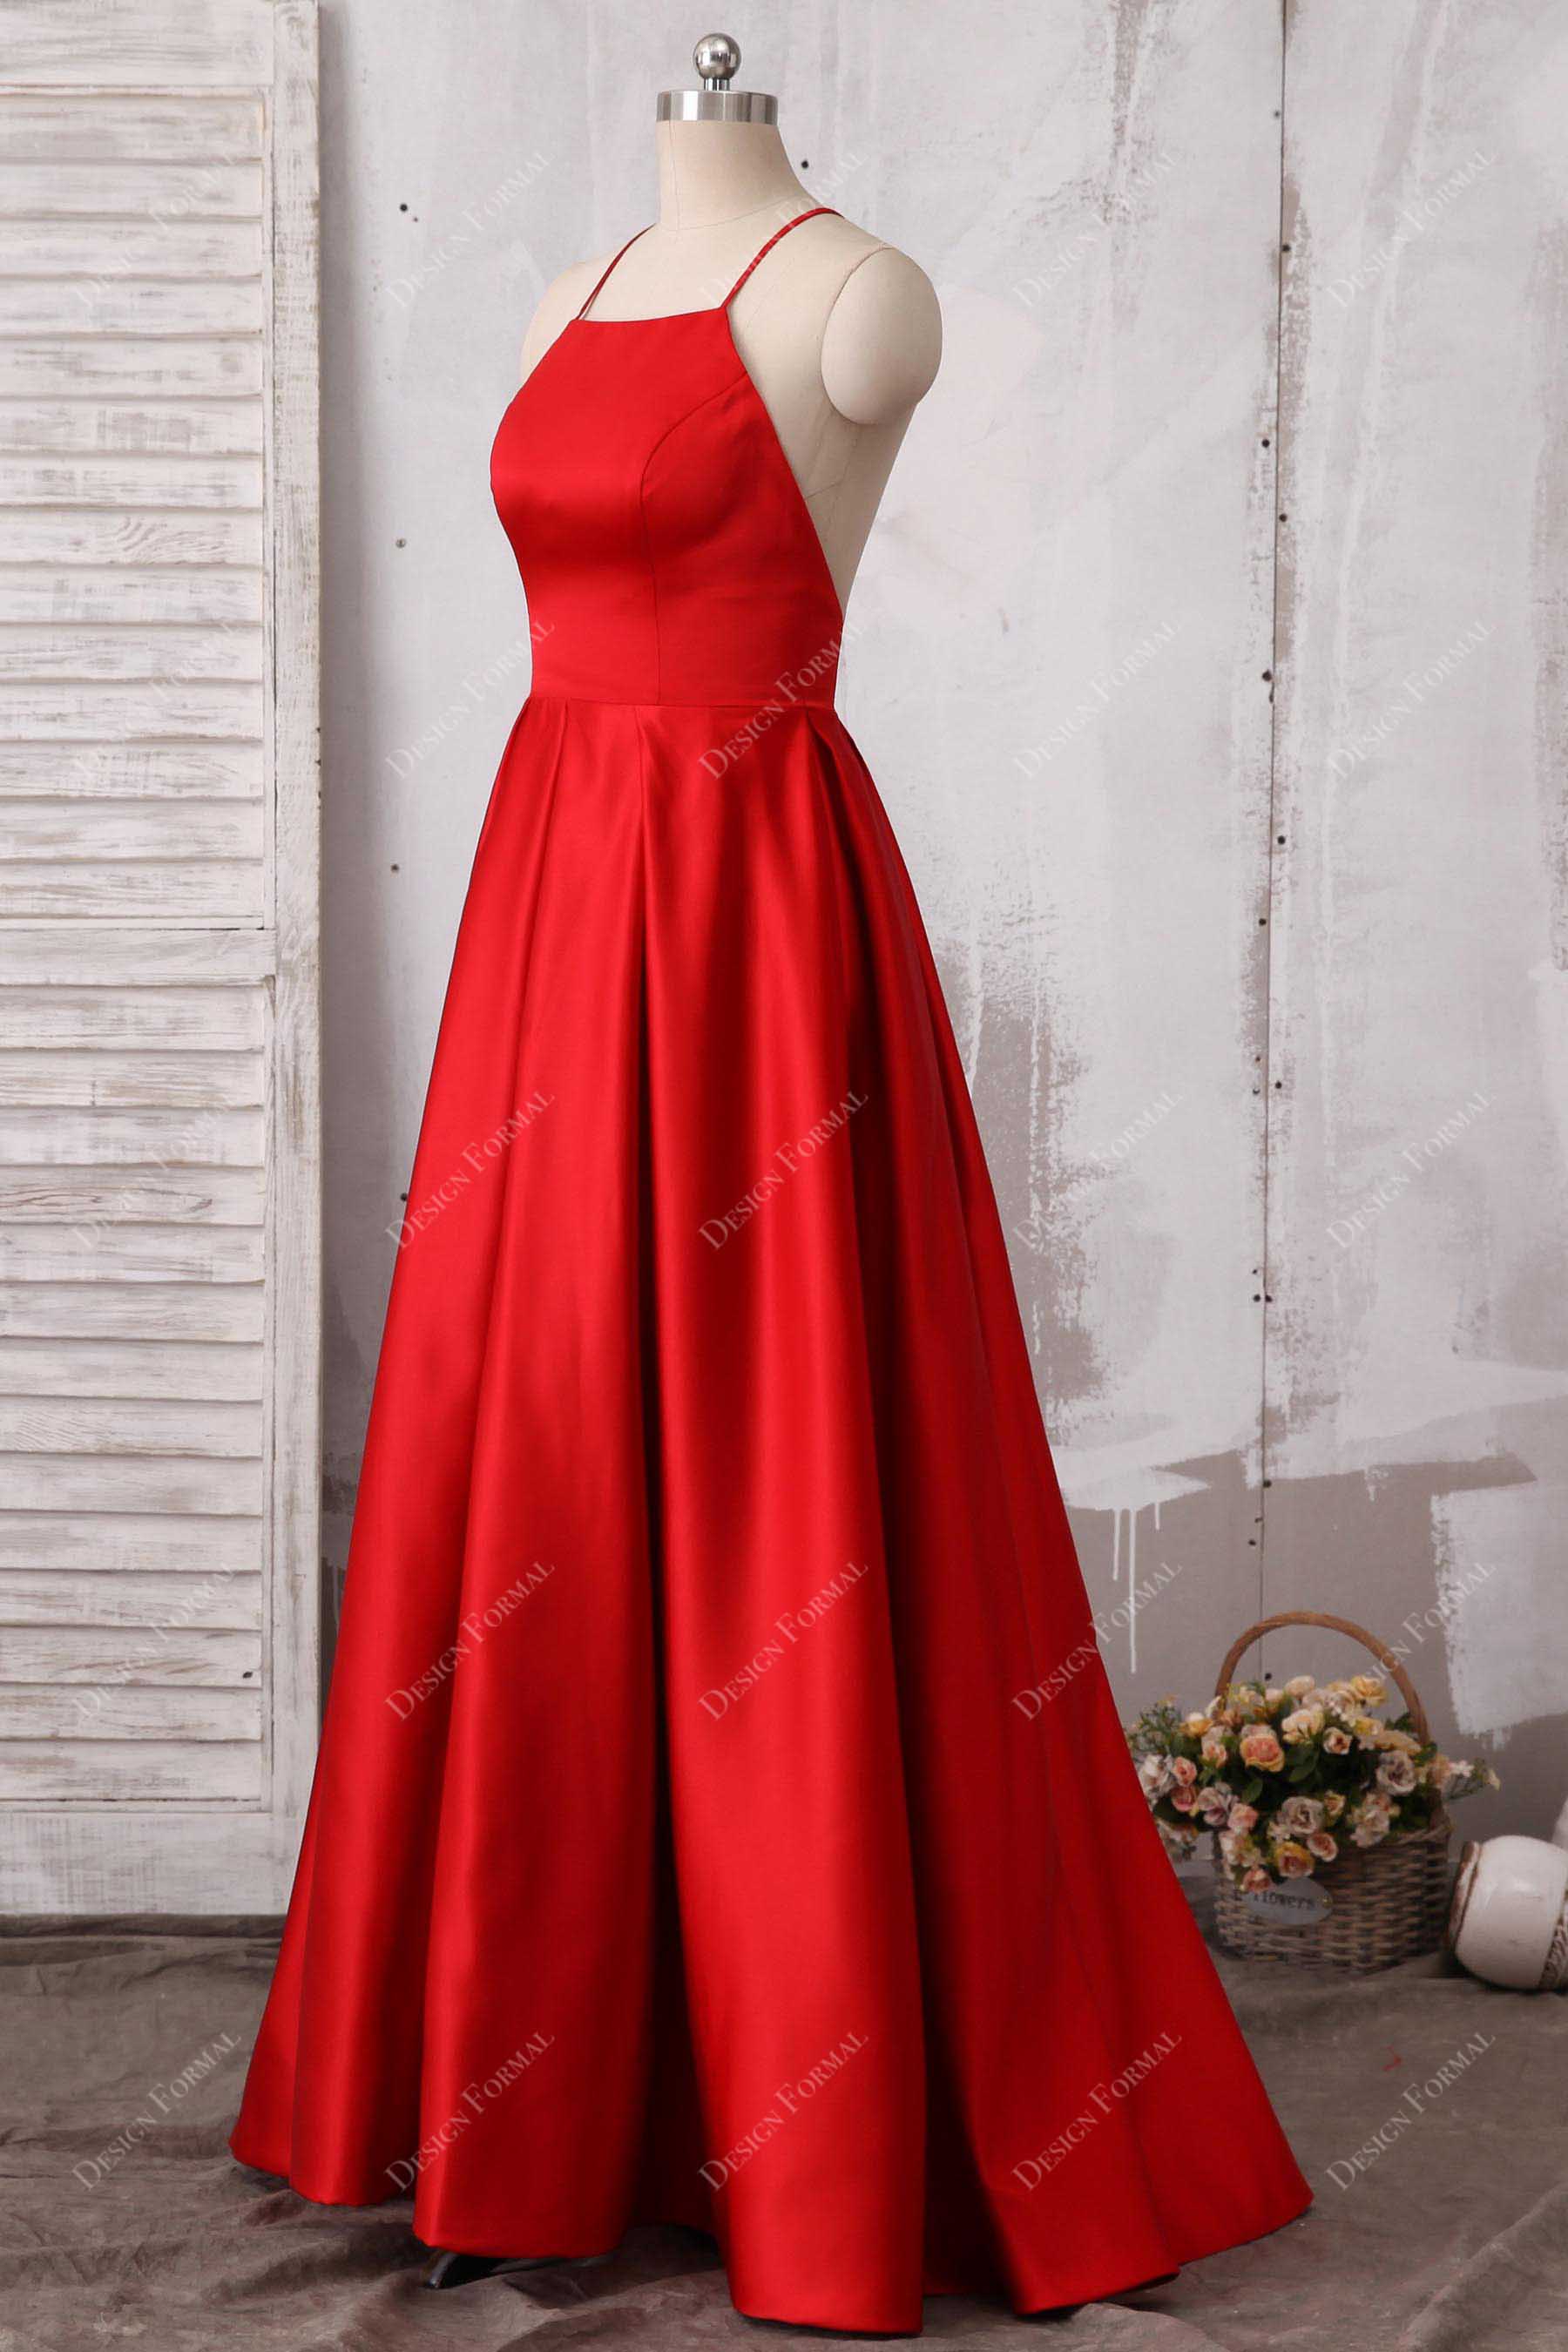 Halter Neck Red Satin Prom Dress